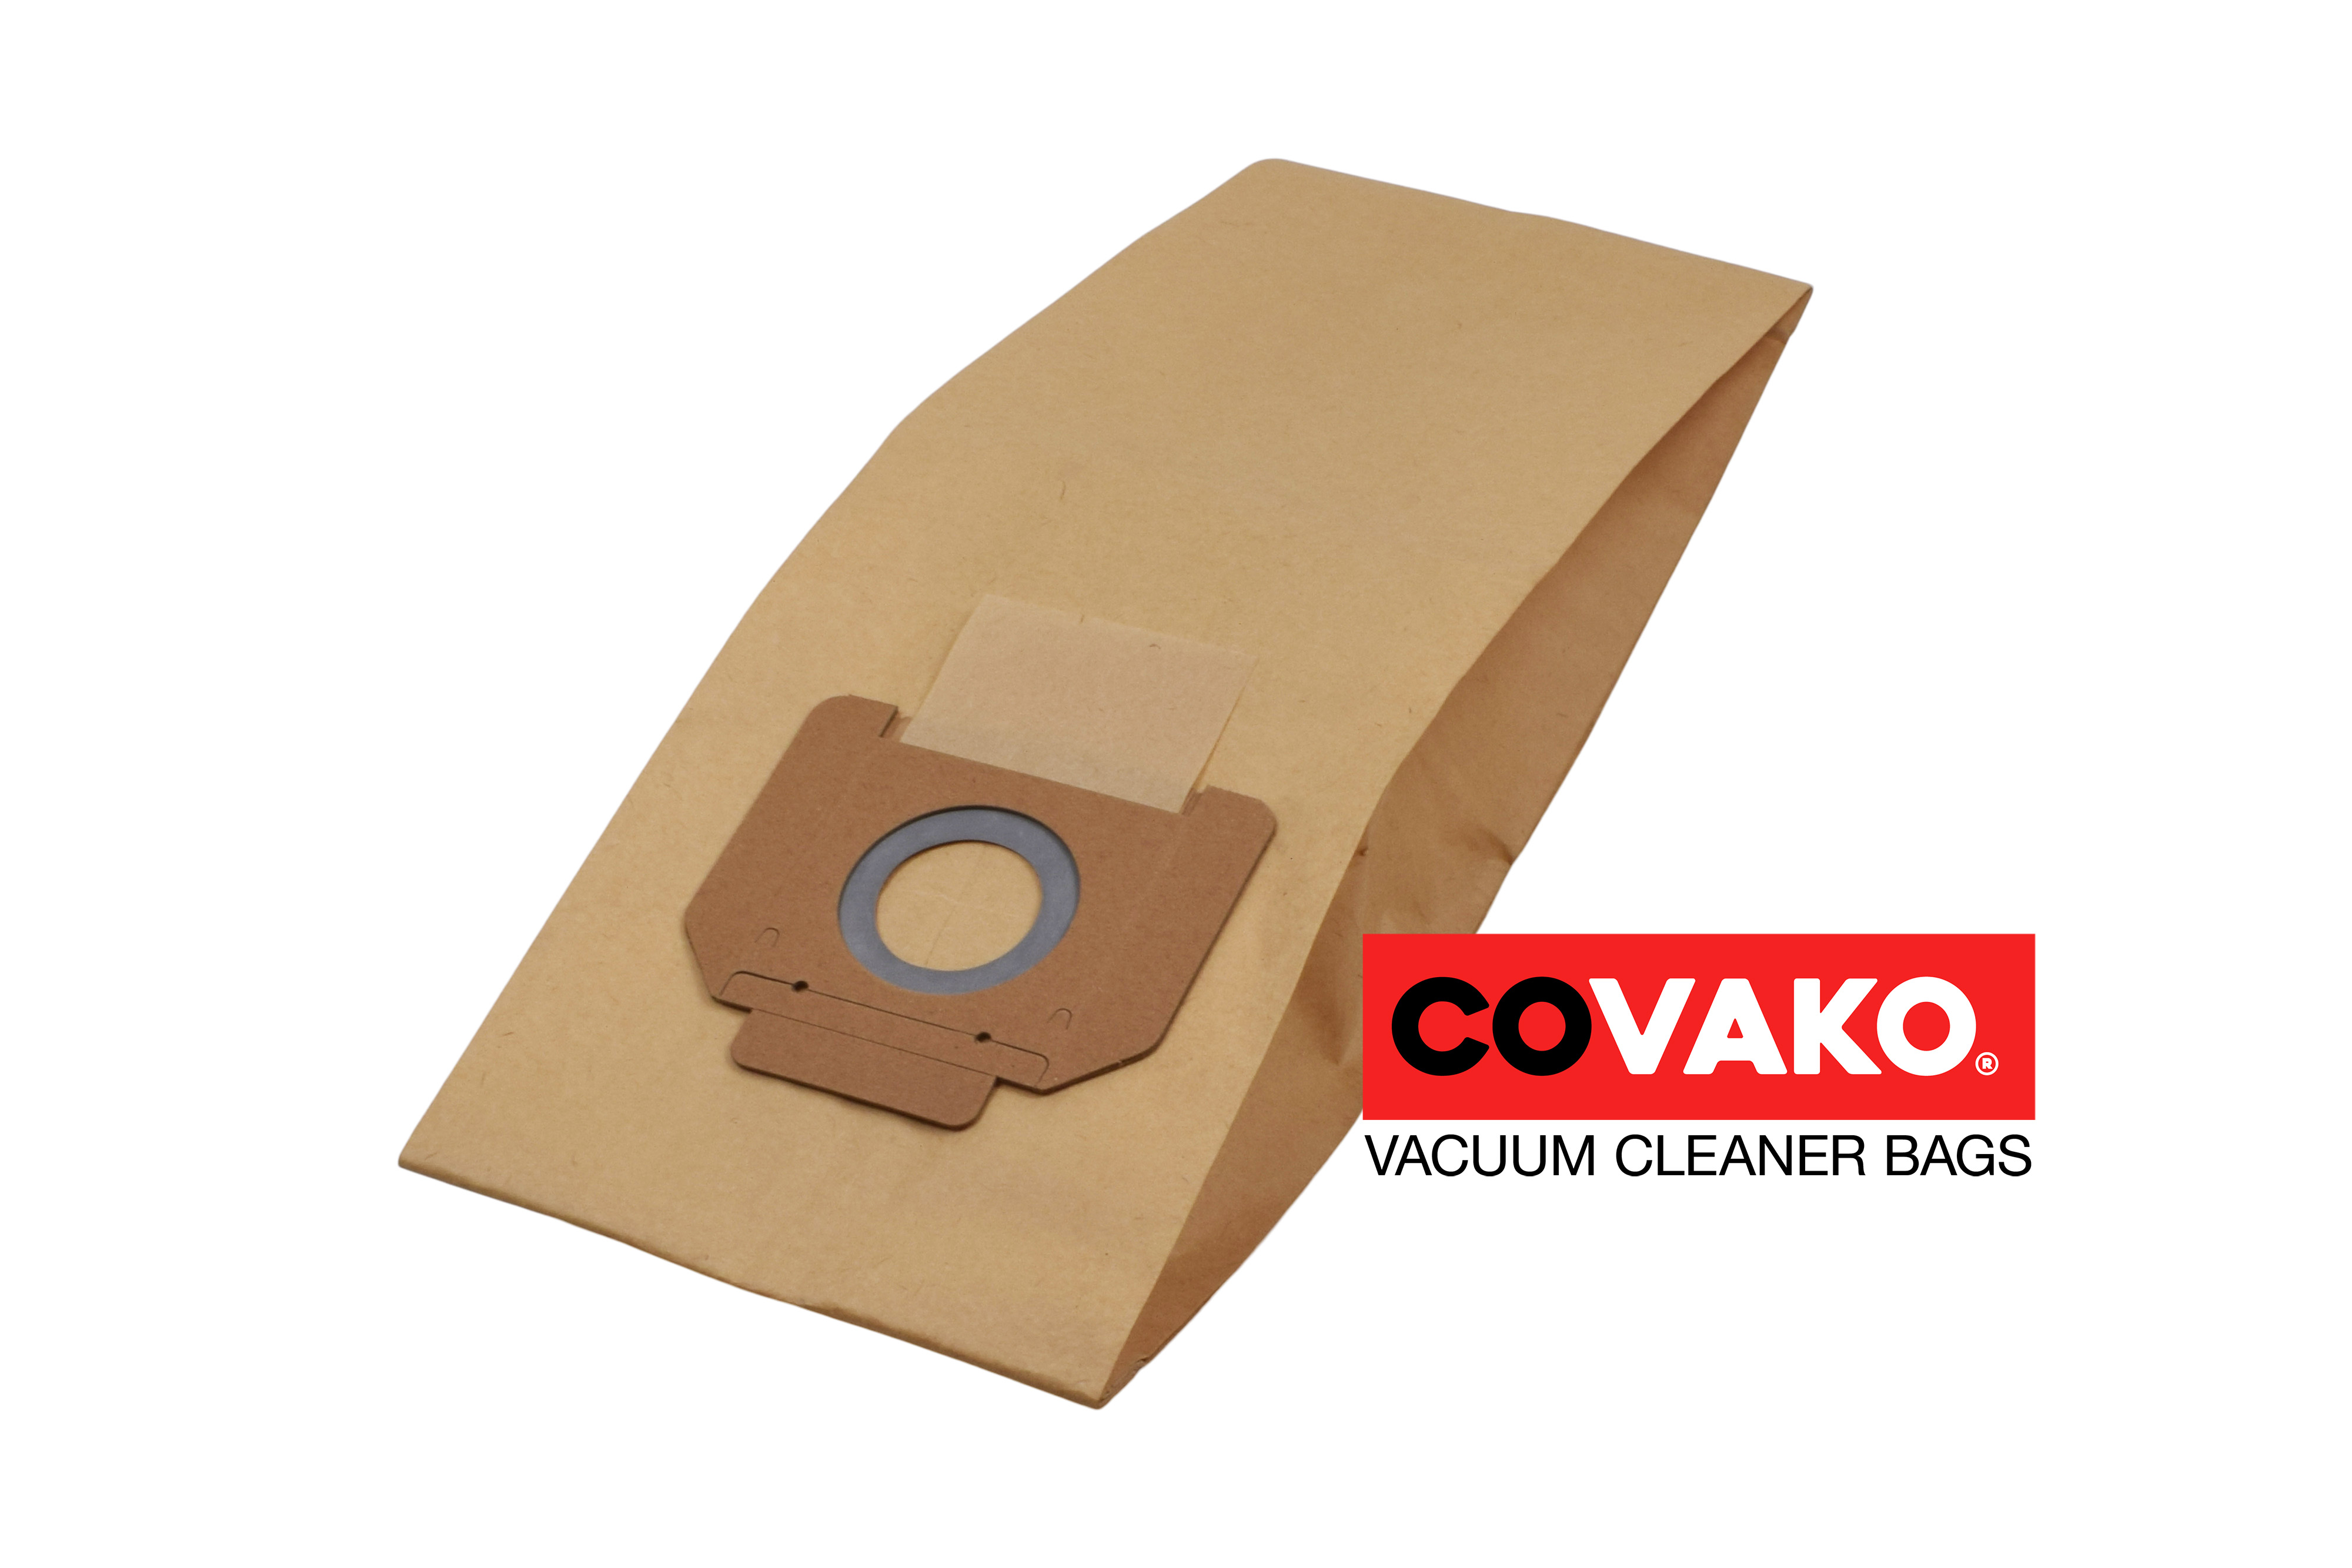 Kärcher A 2731 pt / Paper - Kärcher vacuum cleaner bags